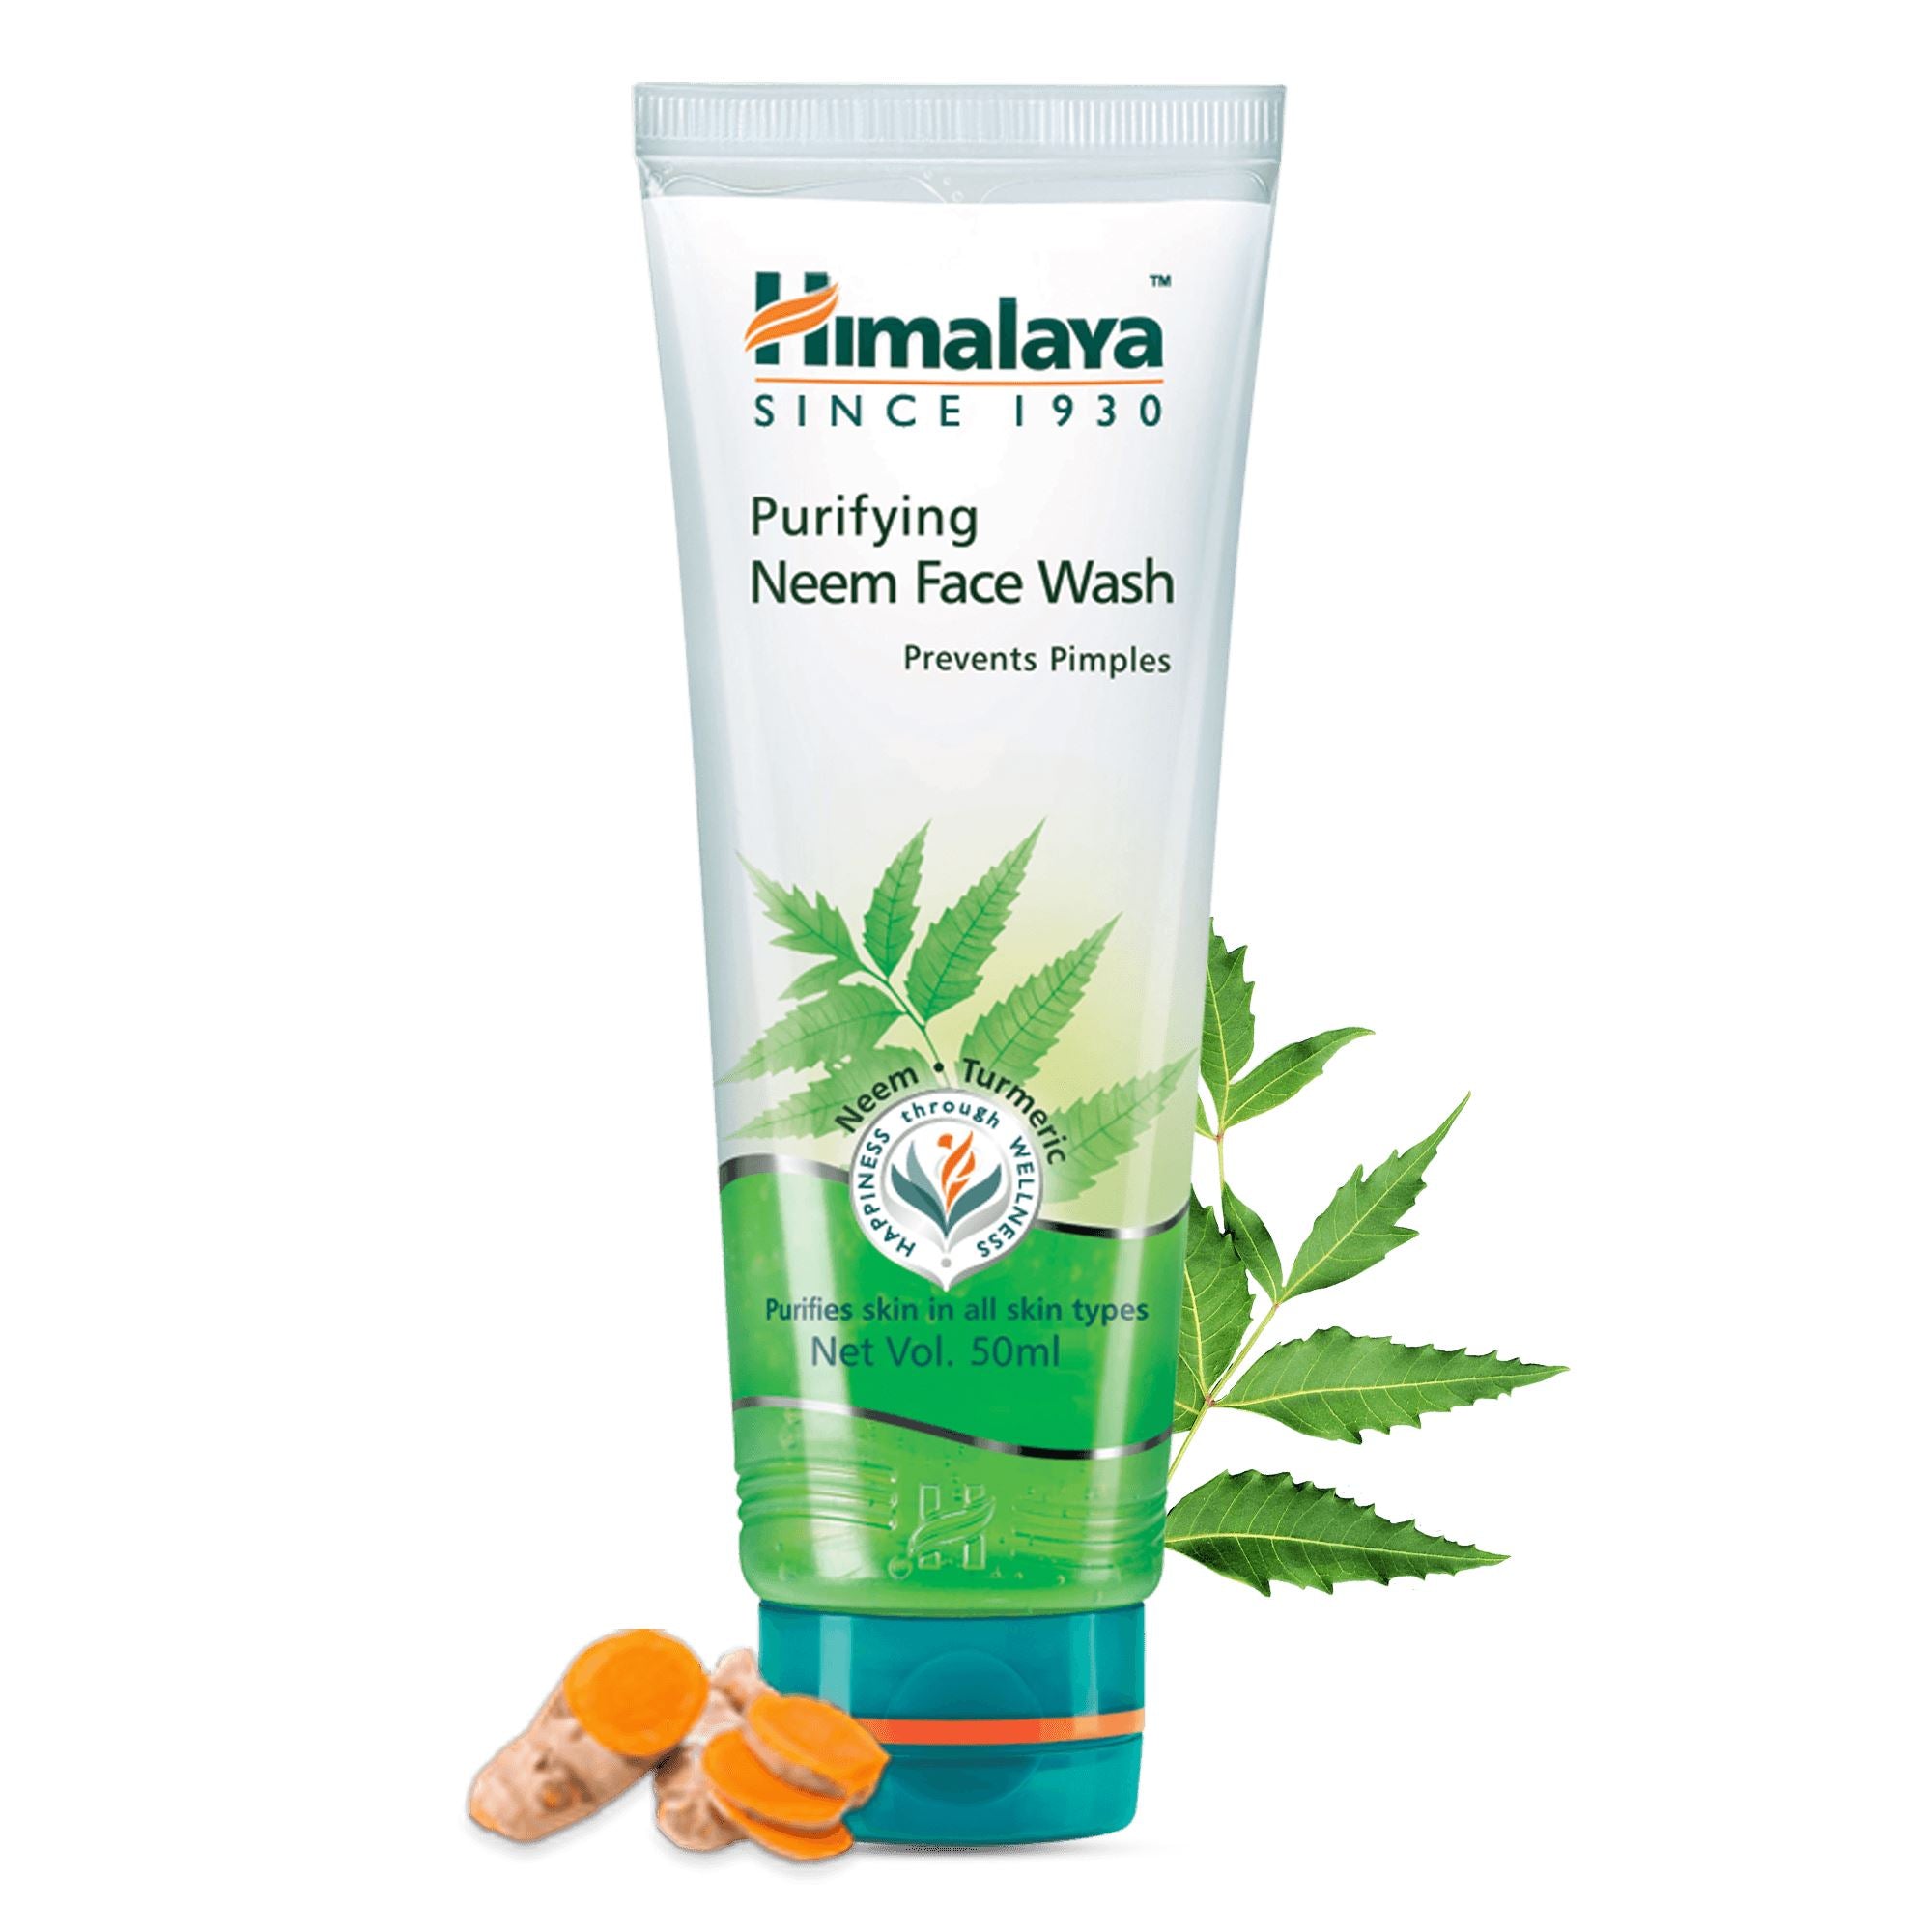 Himalaya Pure Skin Neem Facial Kit - Purifying Neem Face Wash